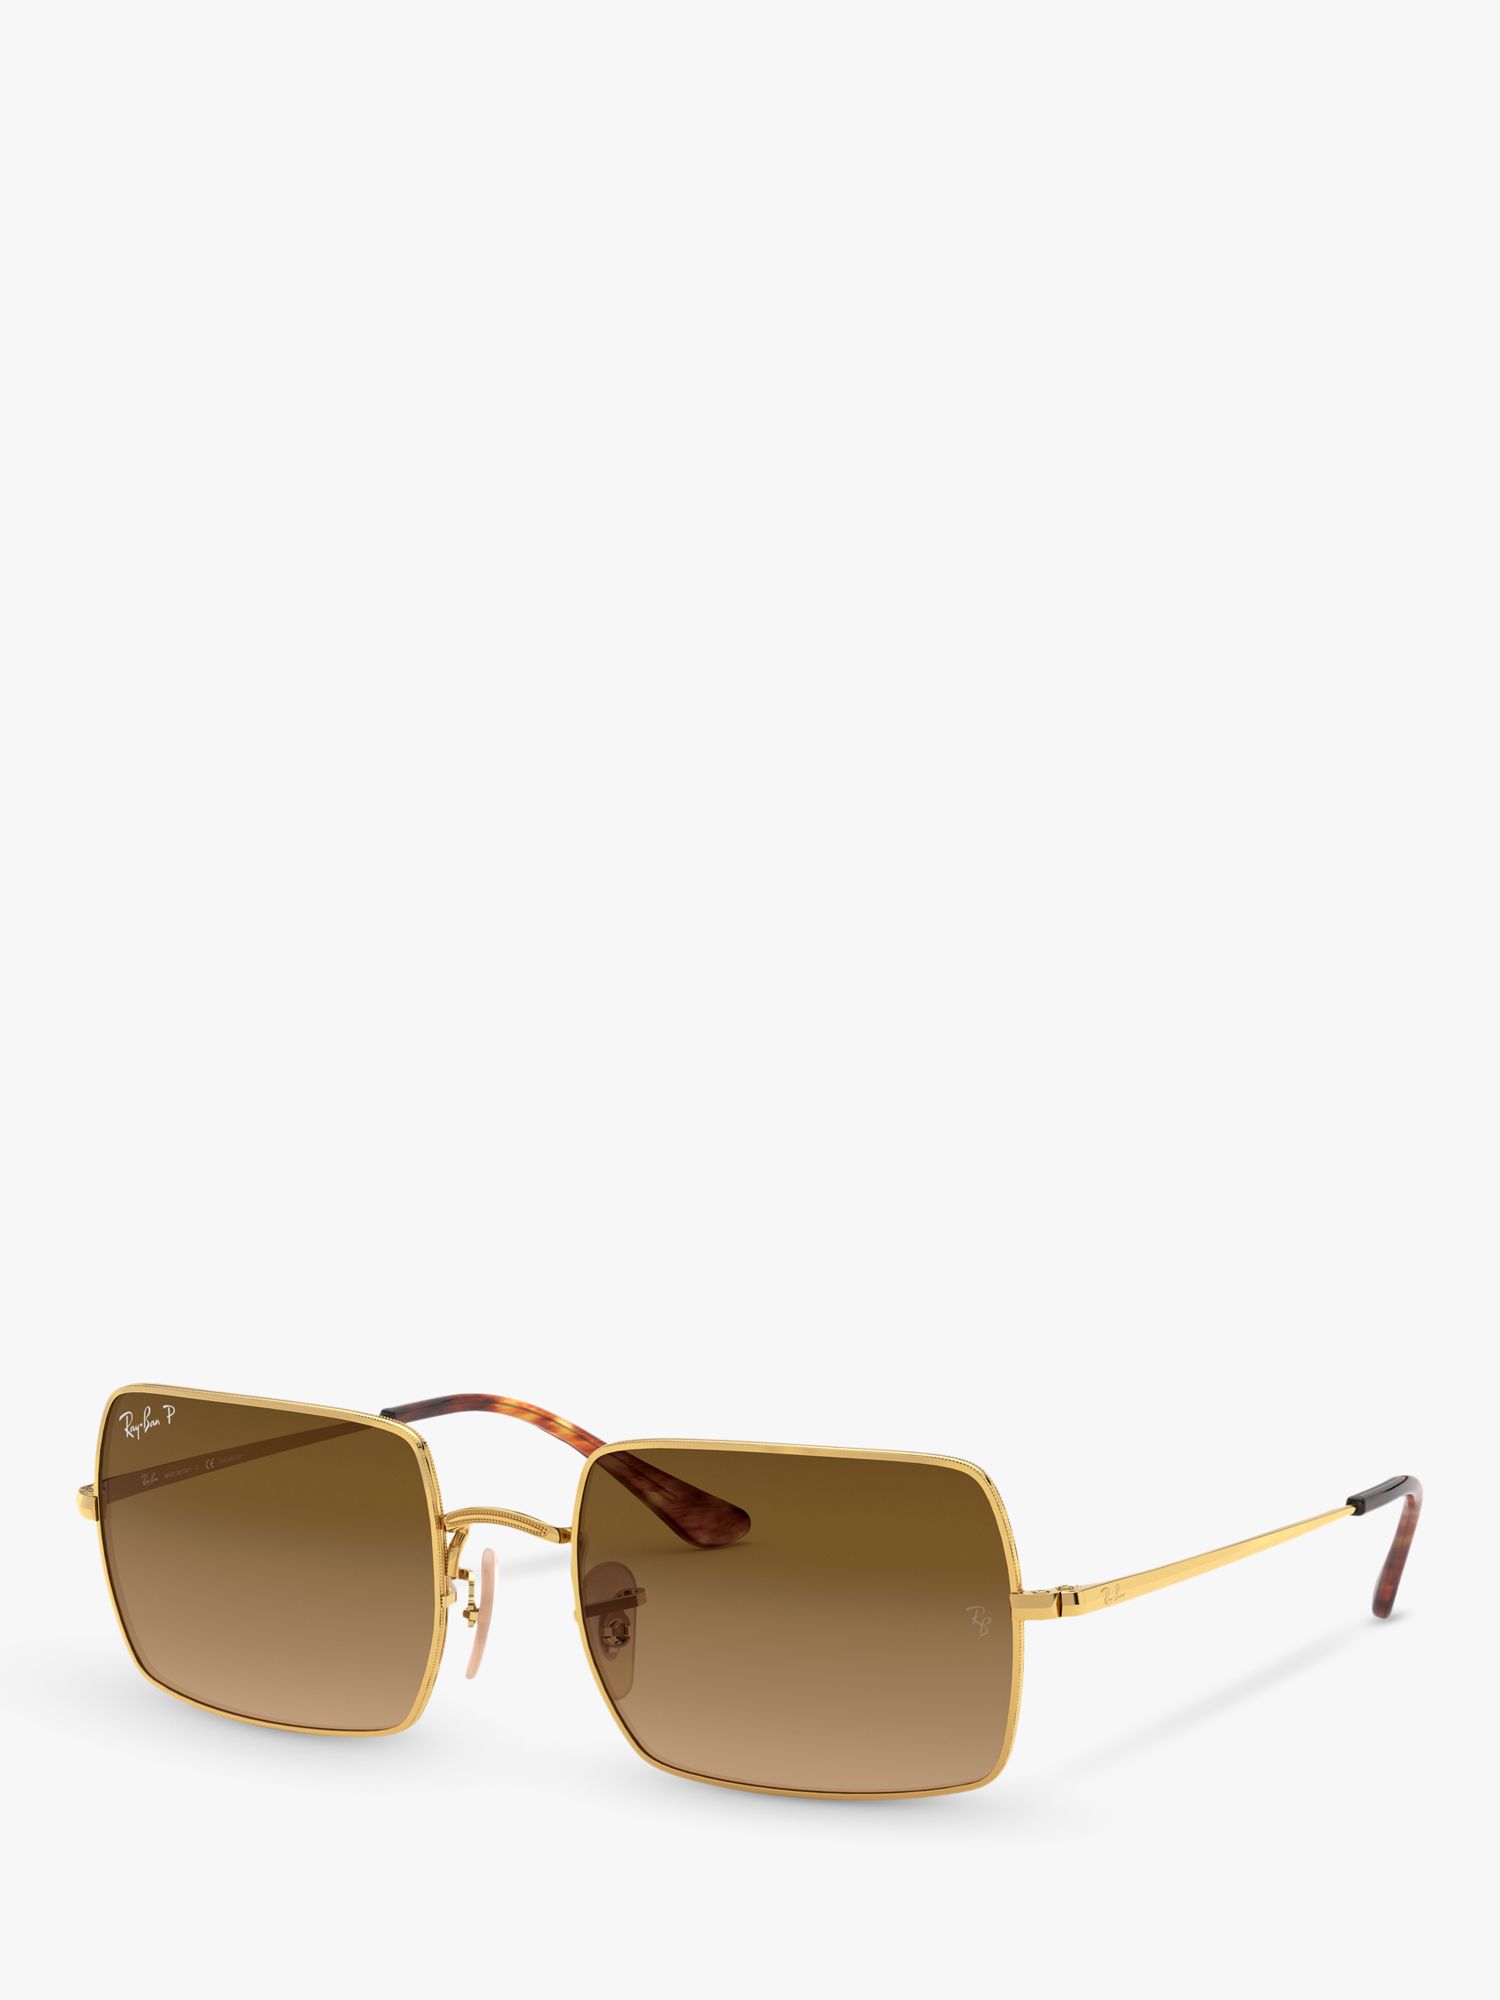 Ray-Ban RB1969 Unisex Polarised Rectangular Sunglasses, Gold/Brown Gradient  at John Lewis & Partners